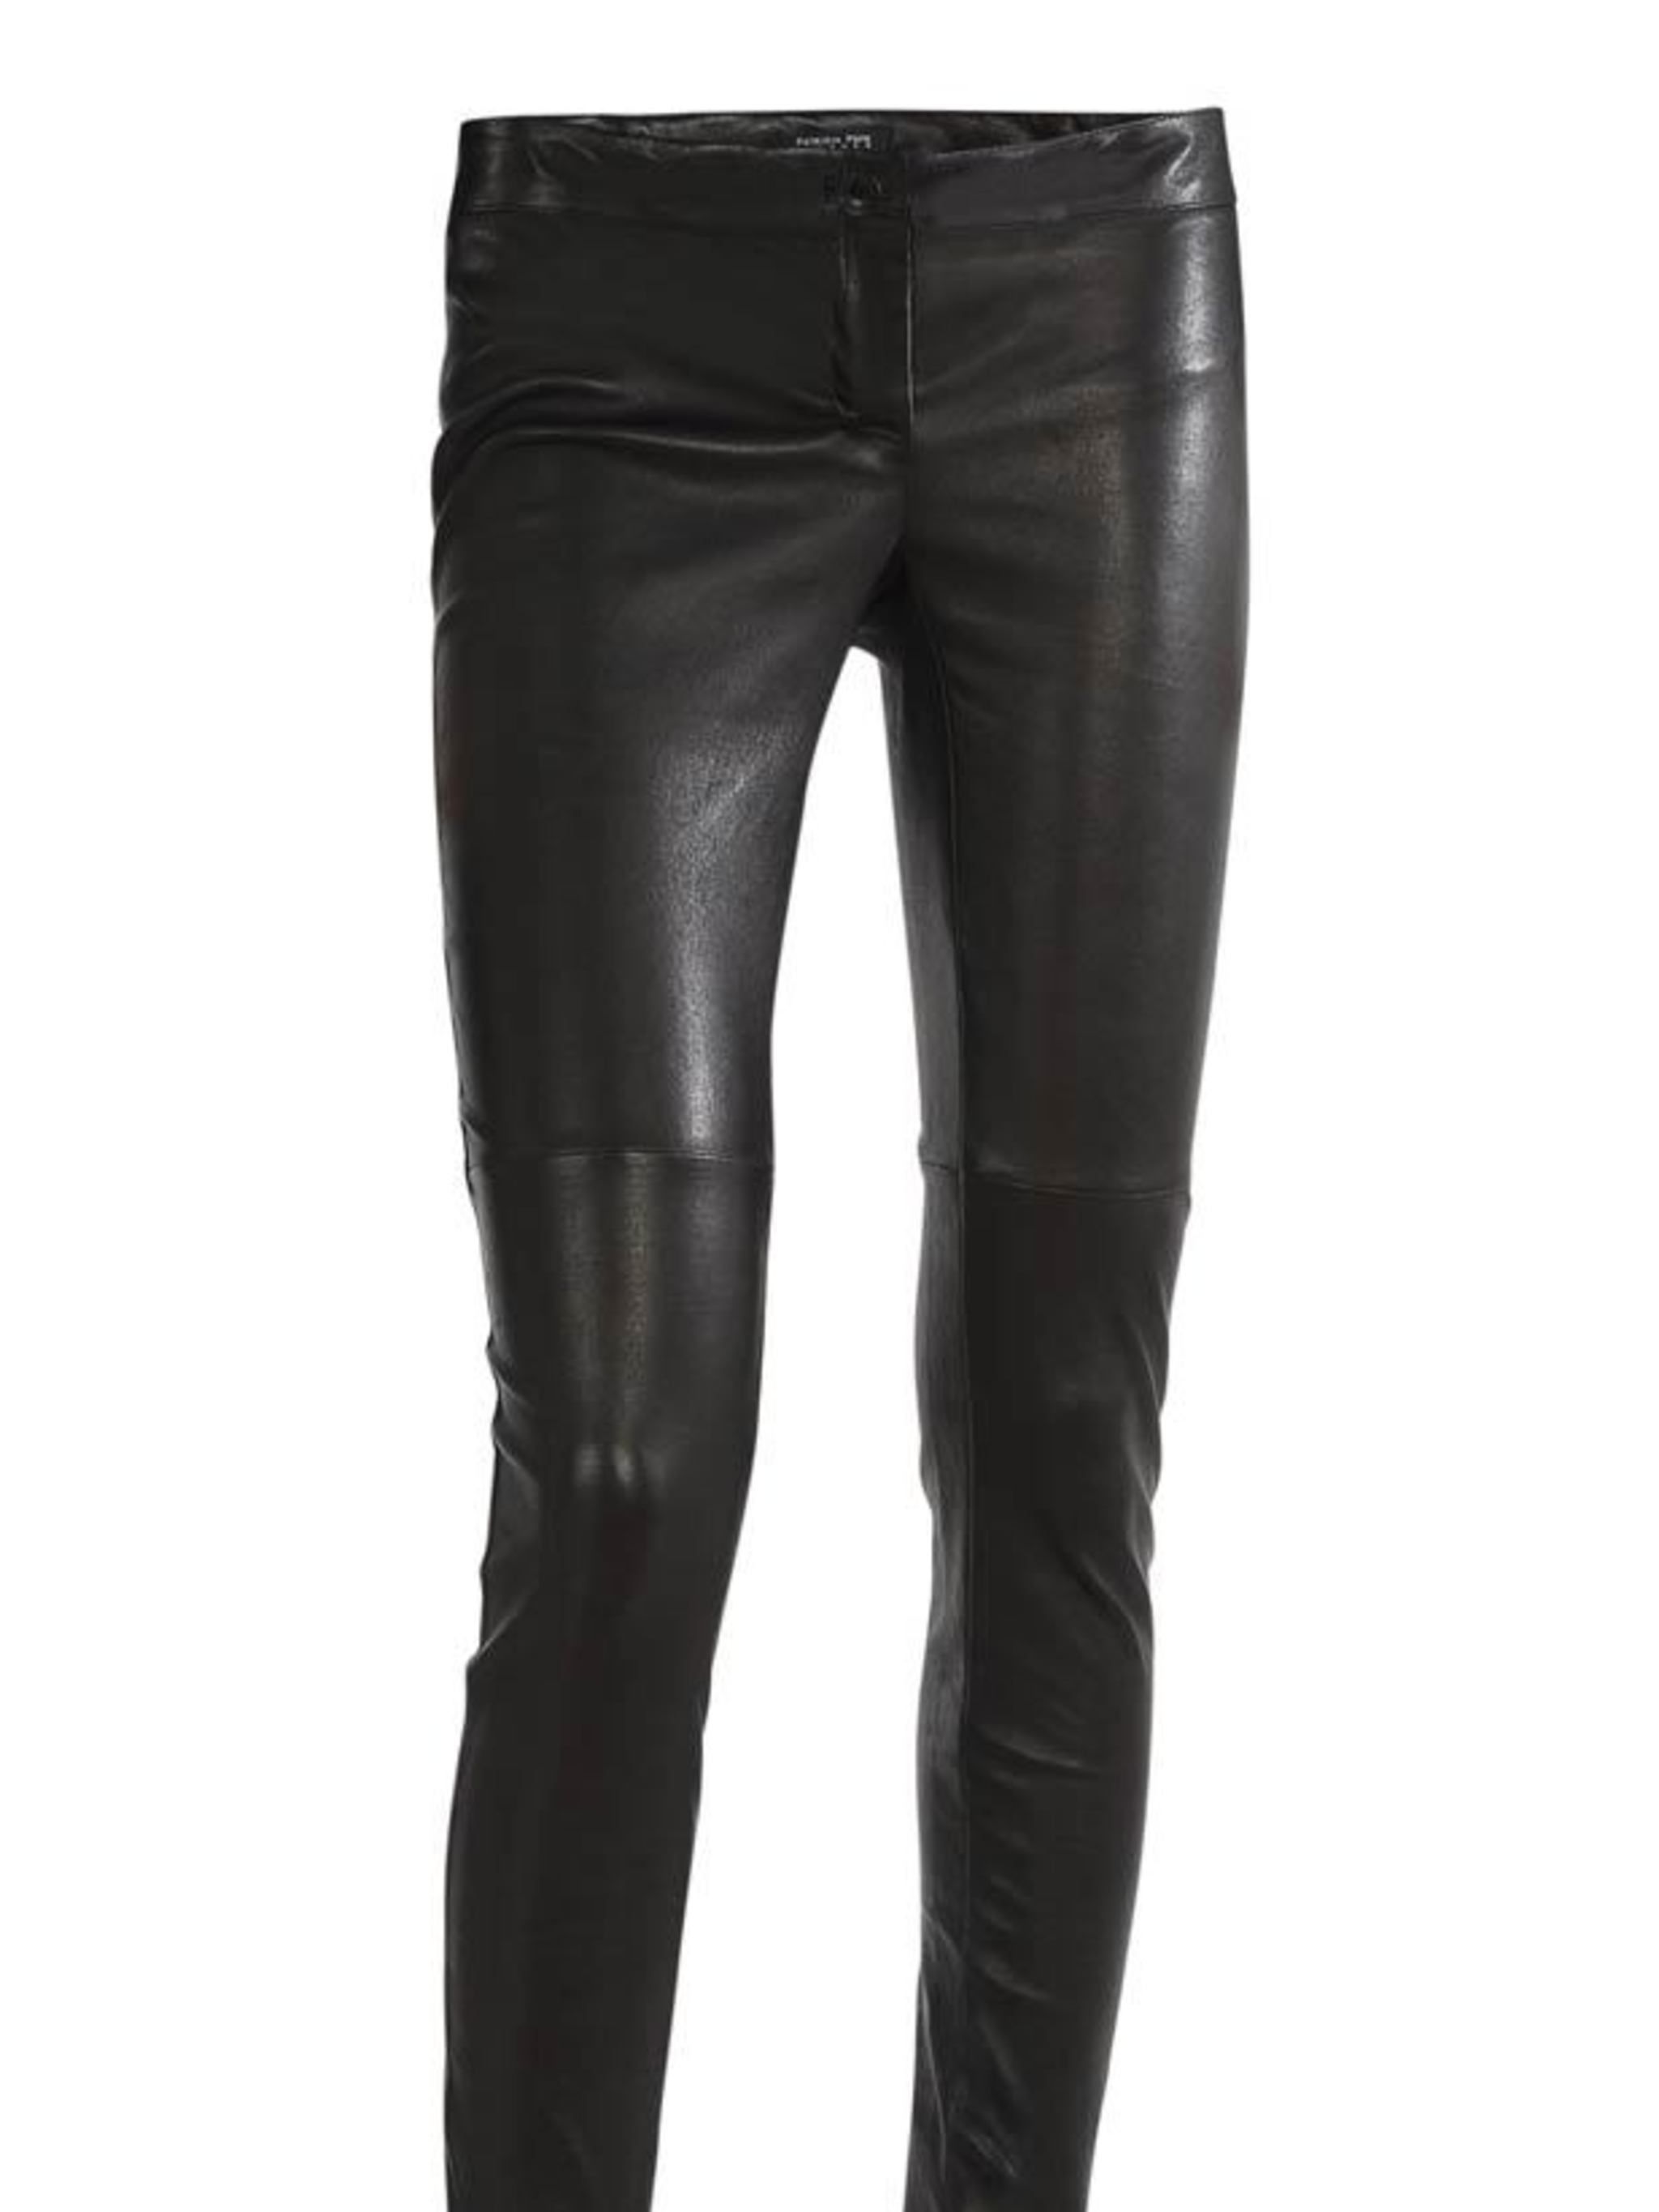 River Island Petite faux leather straight leg trouser in black | ASOS